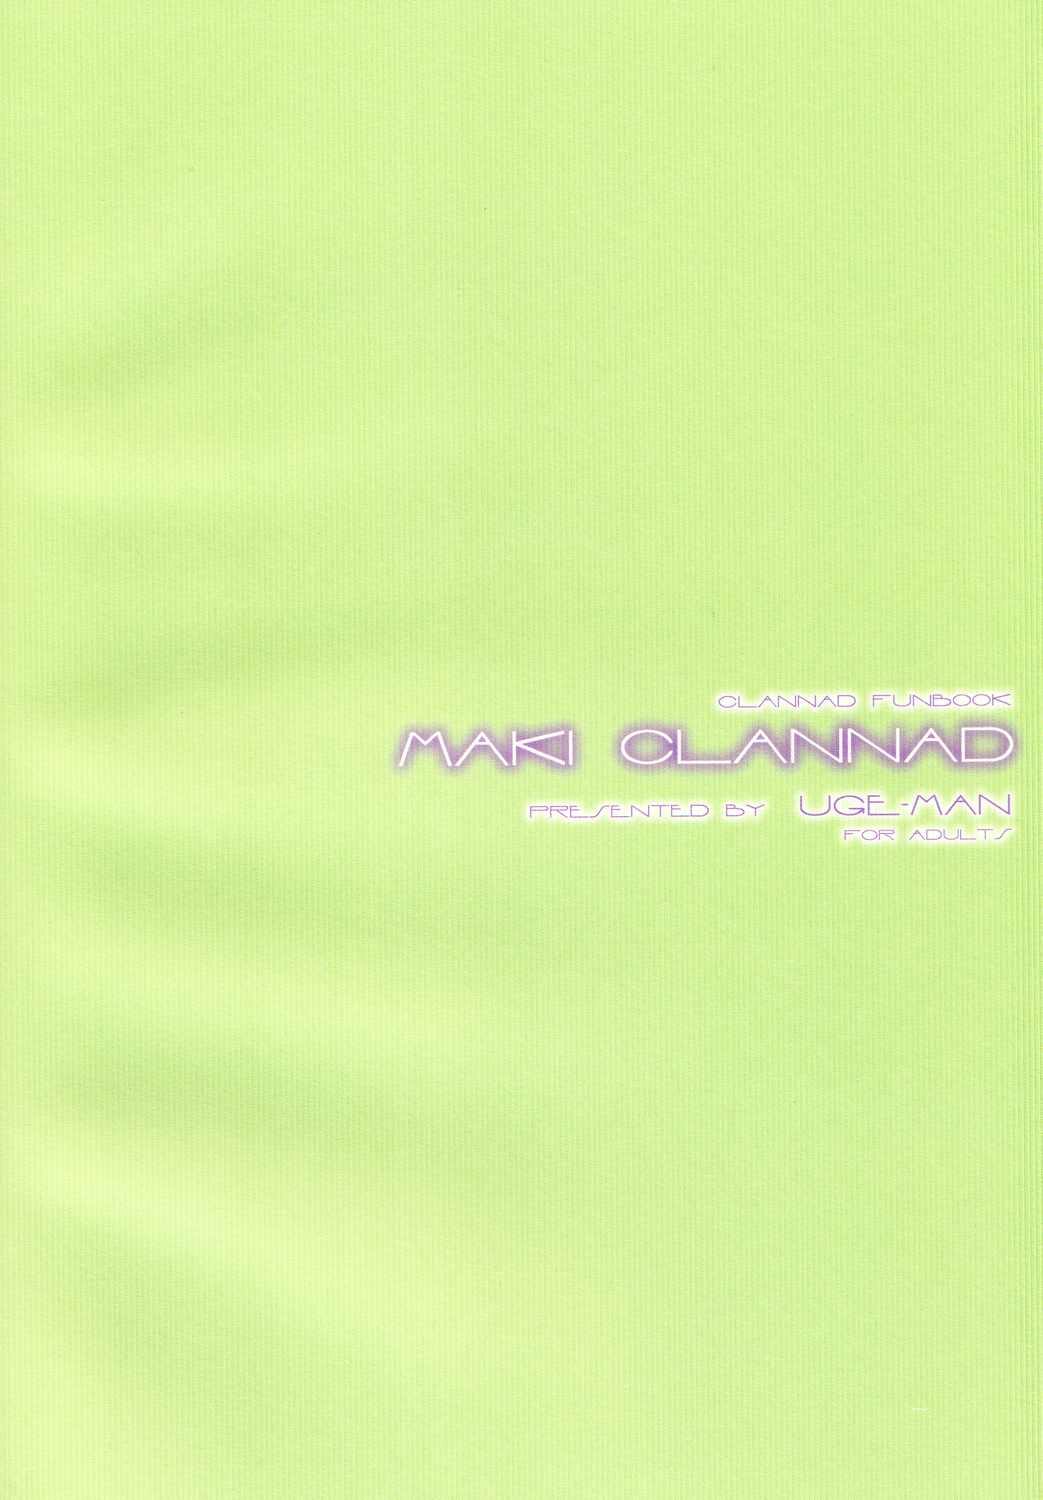 Maki Clannad 26